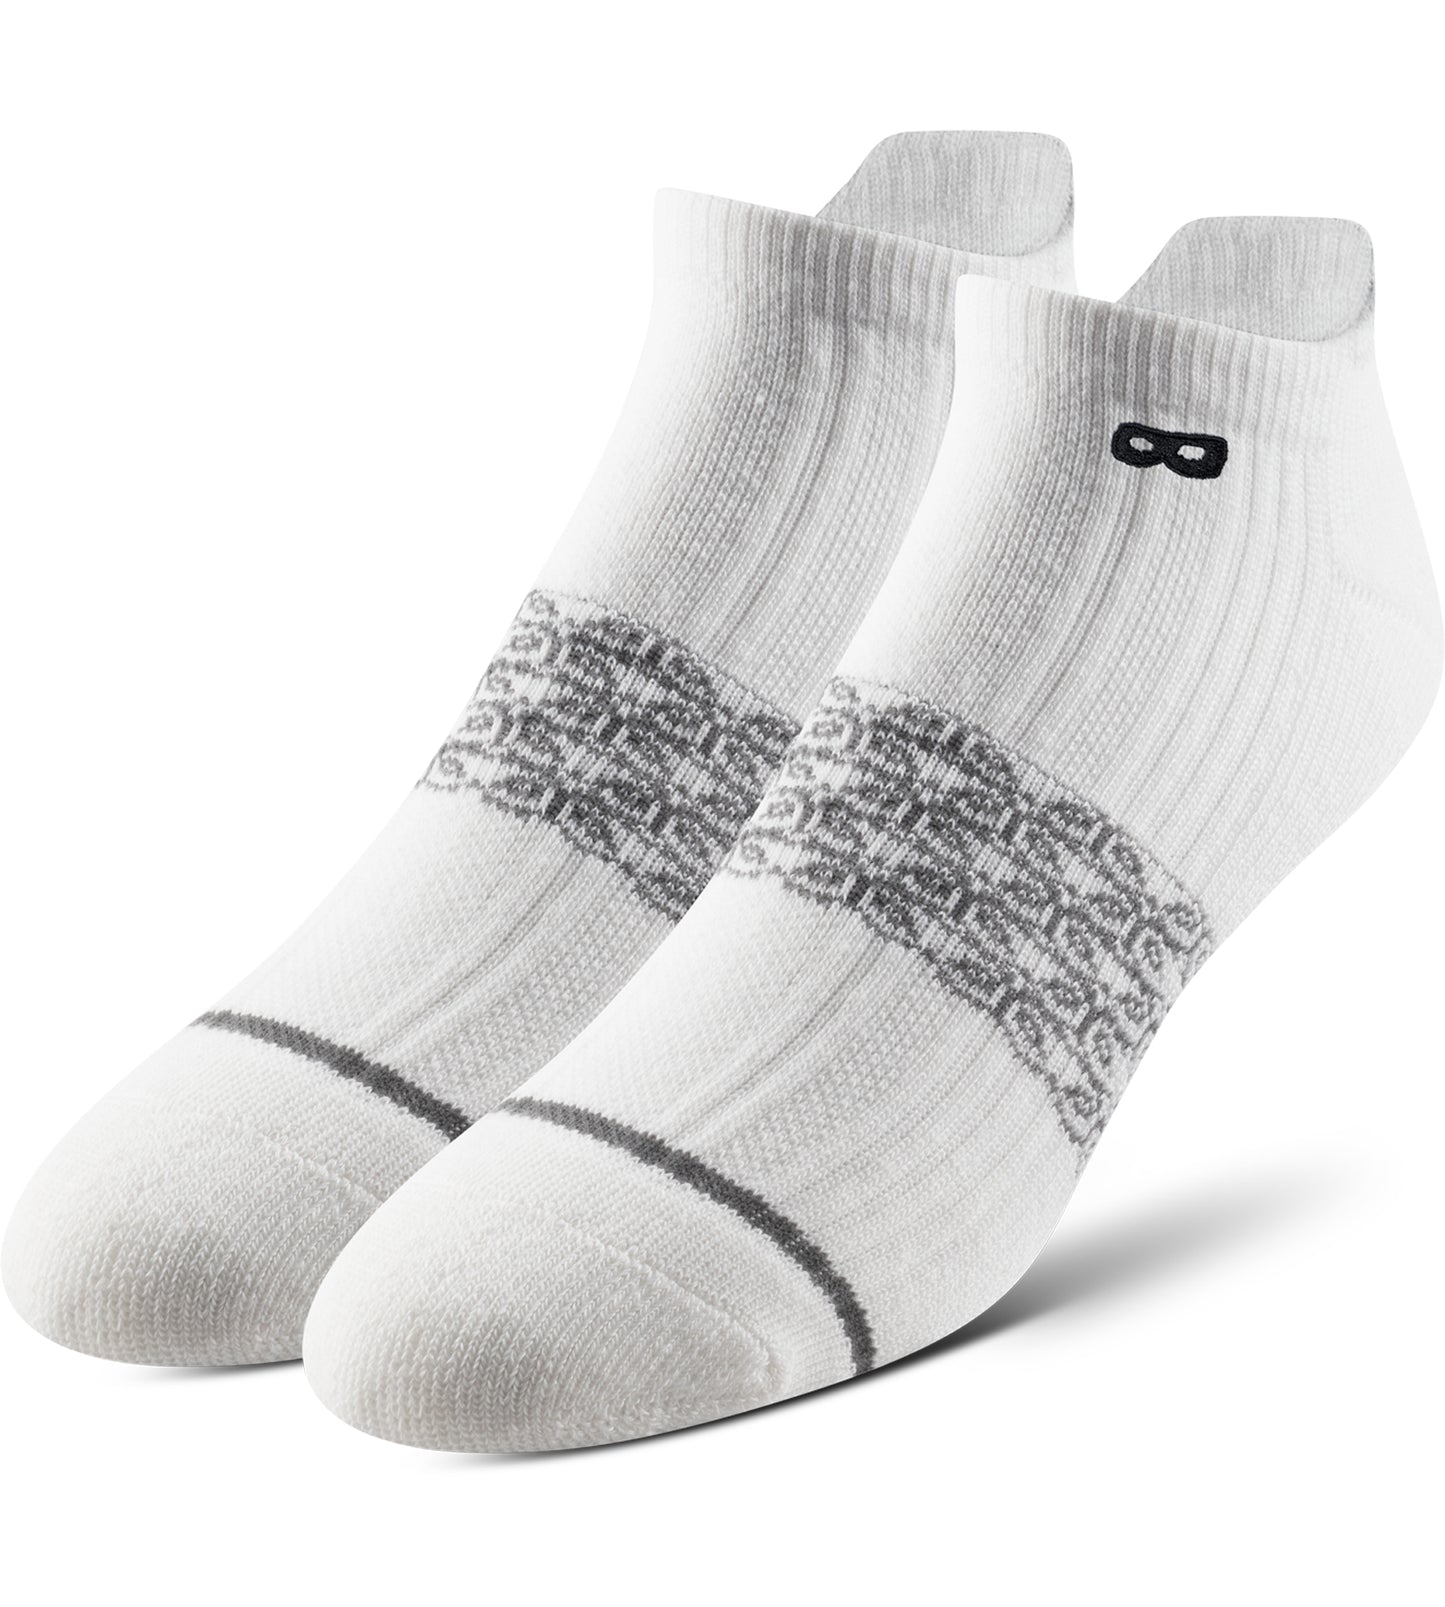 Men’s Cushion Low Cut Socks, white